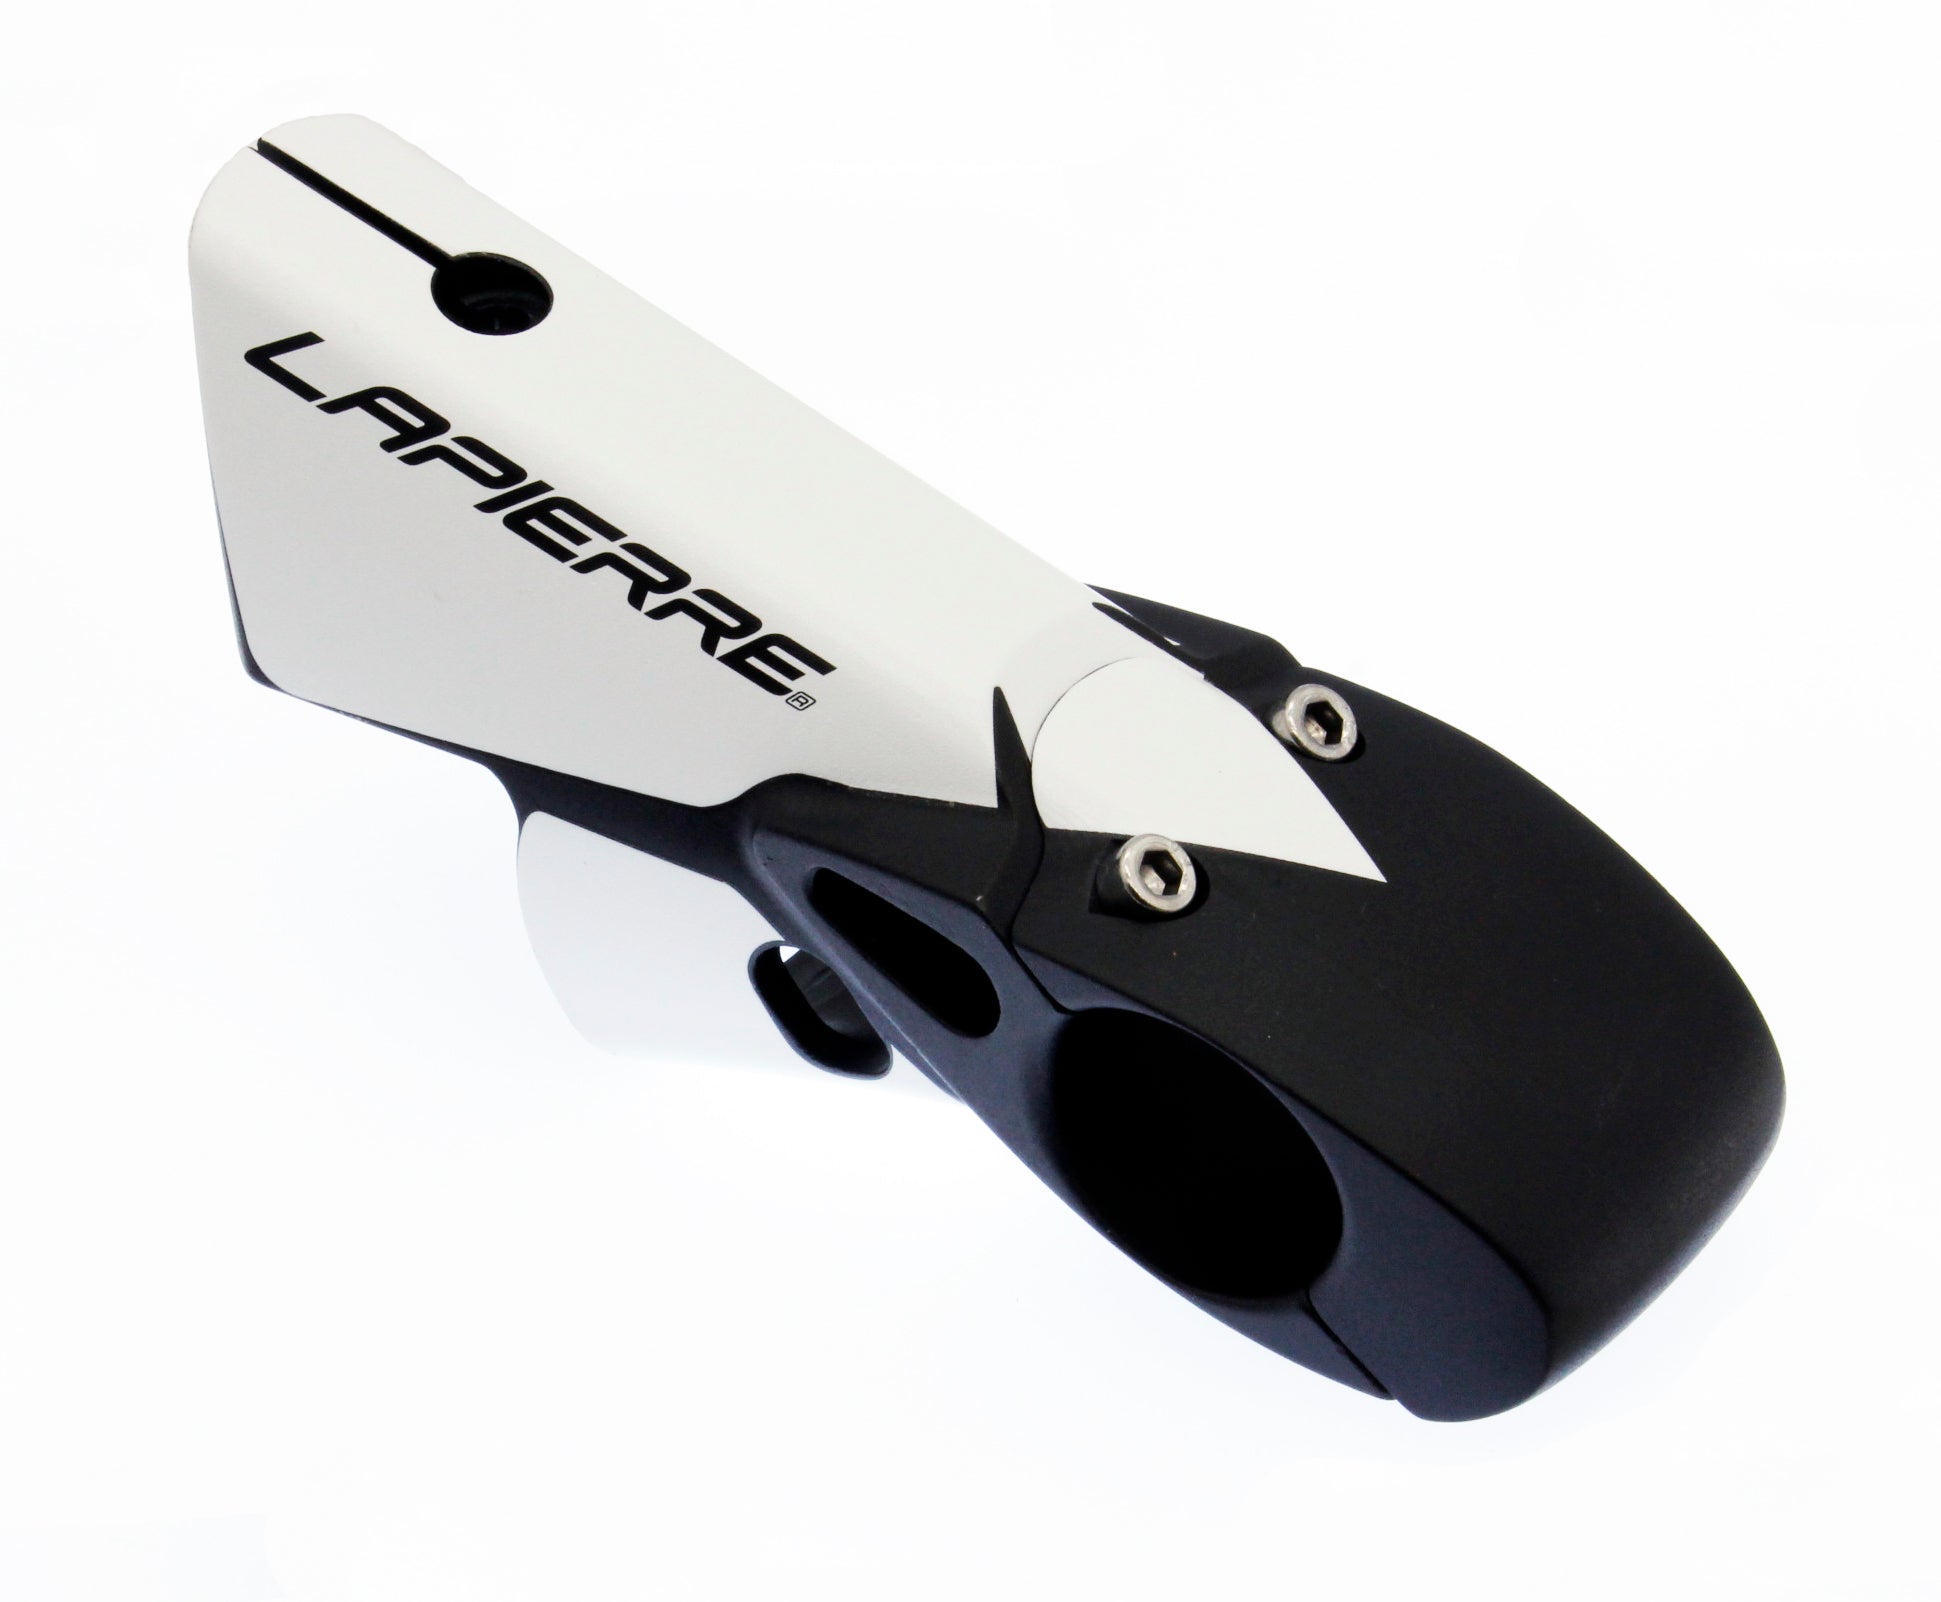 Lapierre Aerostorm TT/Triathlon Cycling Bike Alloy Stem in 31.8mm